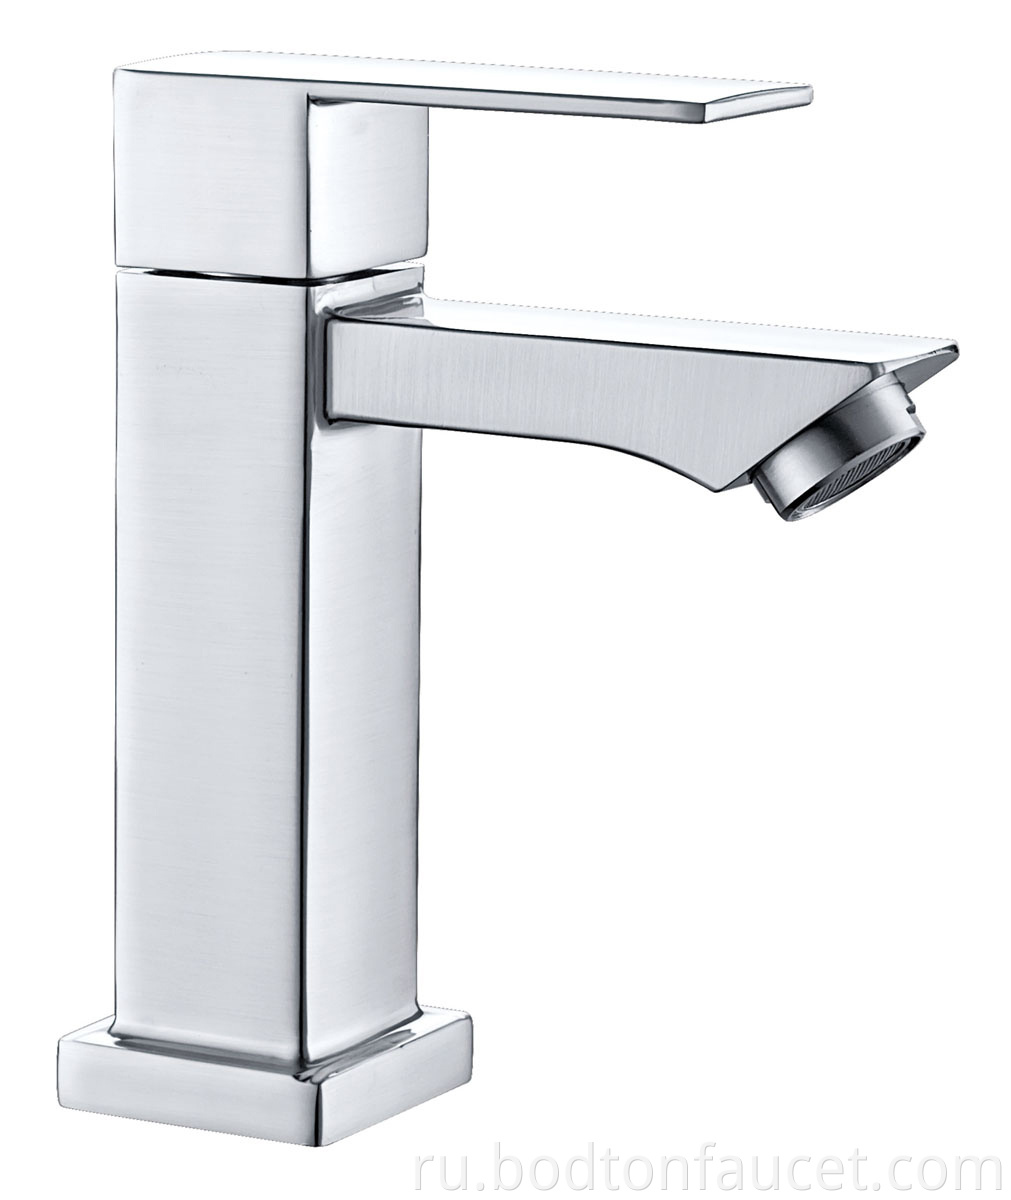 Durable basin faucet for motorhomes